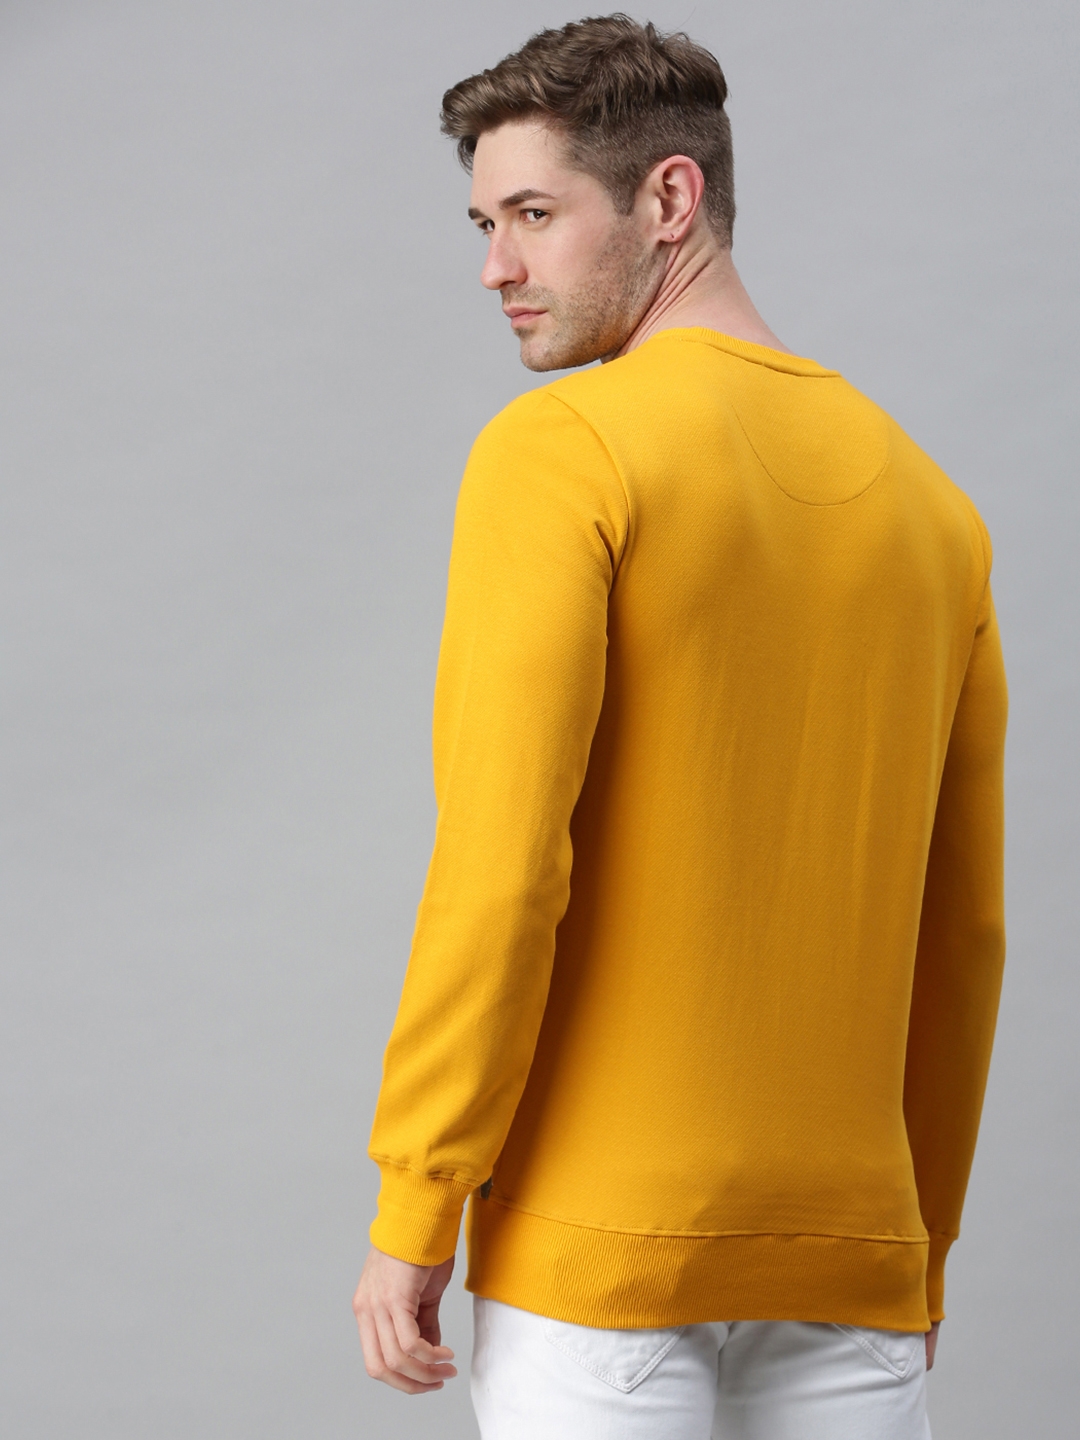 Men's Yellow Cotton Blend Printed Sweatshirts